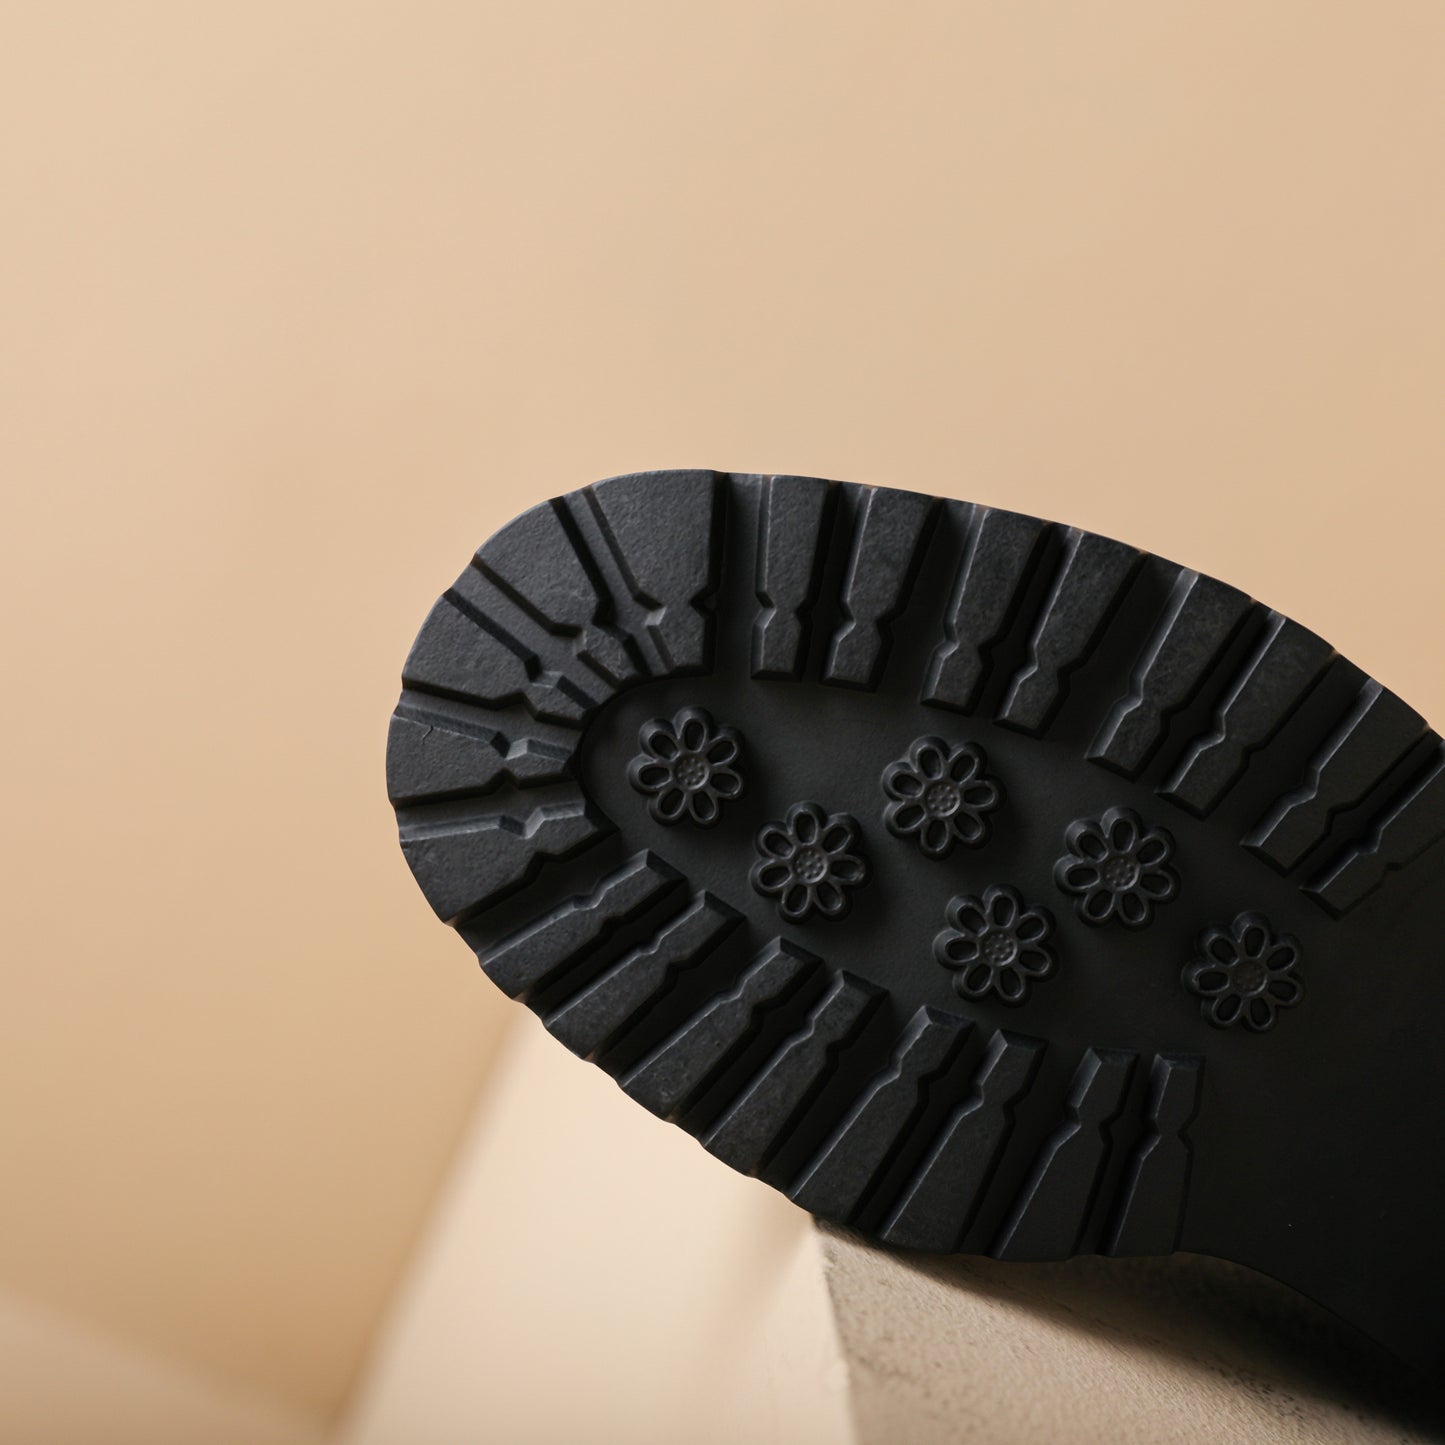 TinaCus Women's Handmade Genuine Leather Block Heel Selftie Side Zip Round Toe Mid Calf Boots